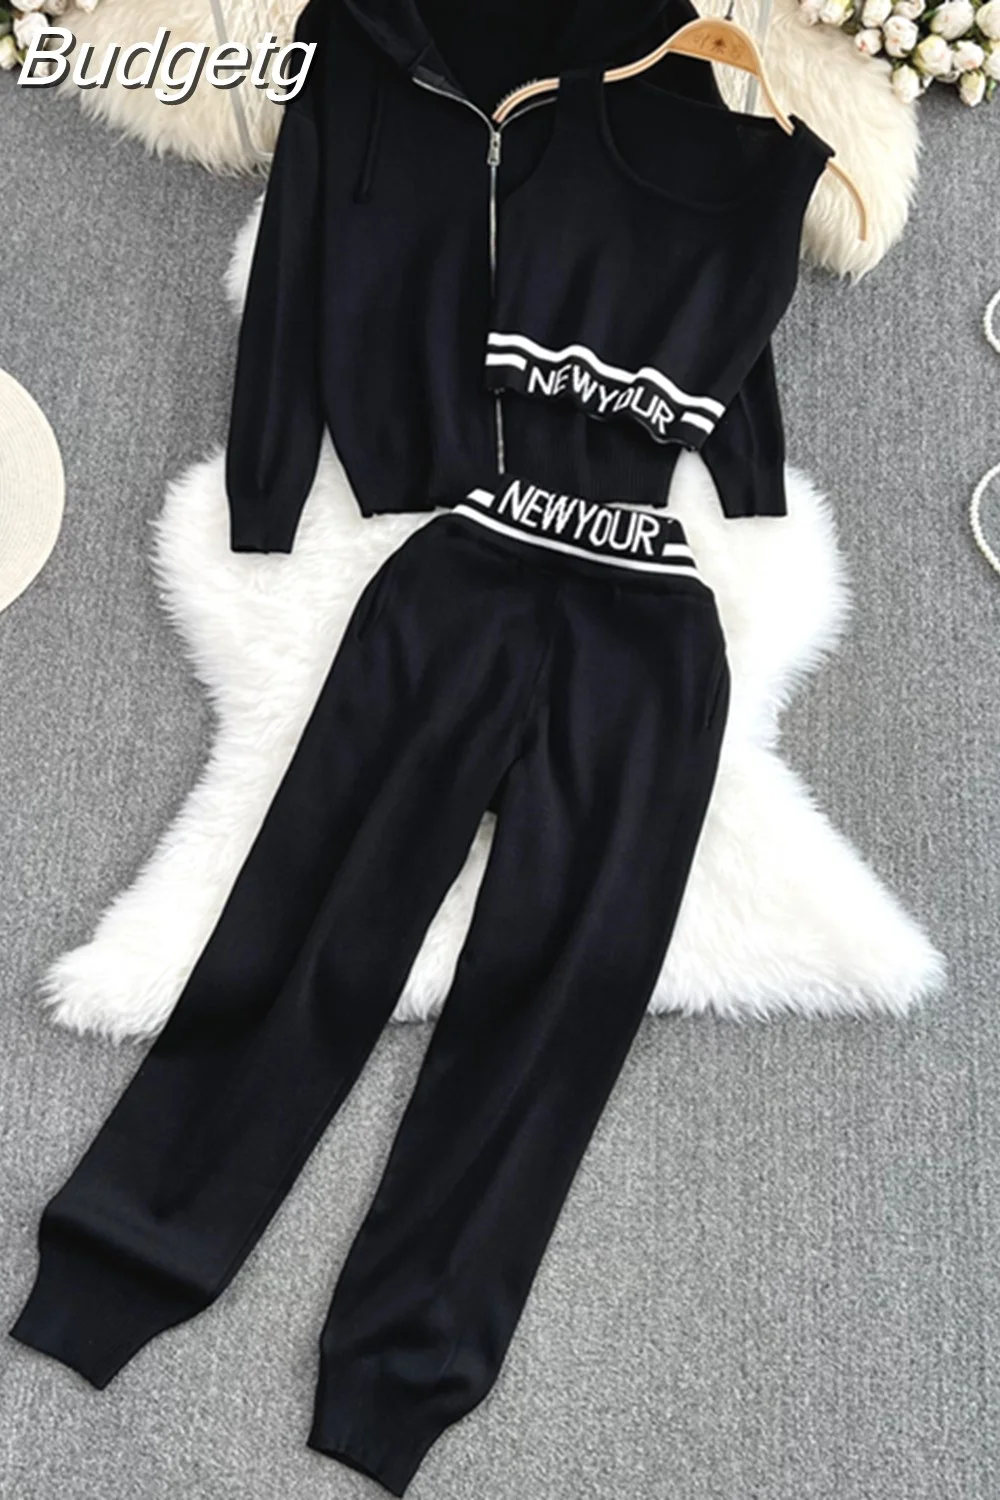 Budgetg Sweater Tracksuit Women Fashion Zipper Hooded Knit Cardigan + Letter Vest + Pocket Harem Pants SetS Women's 3pcs Suit